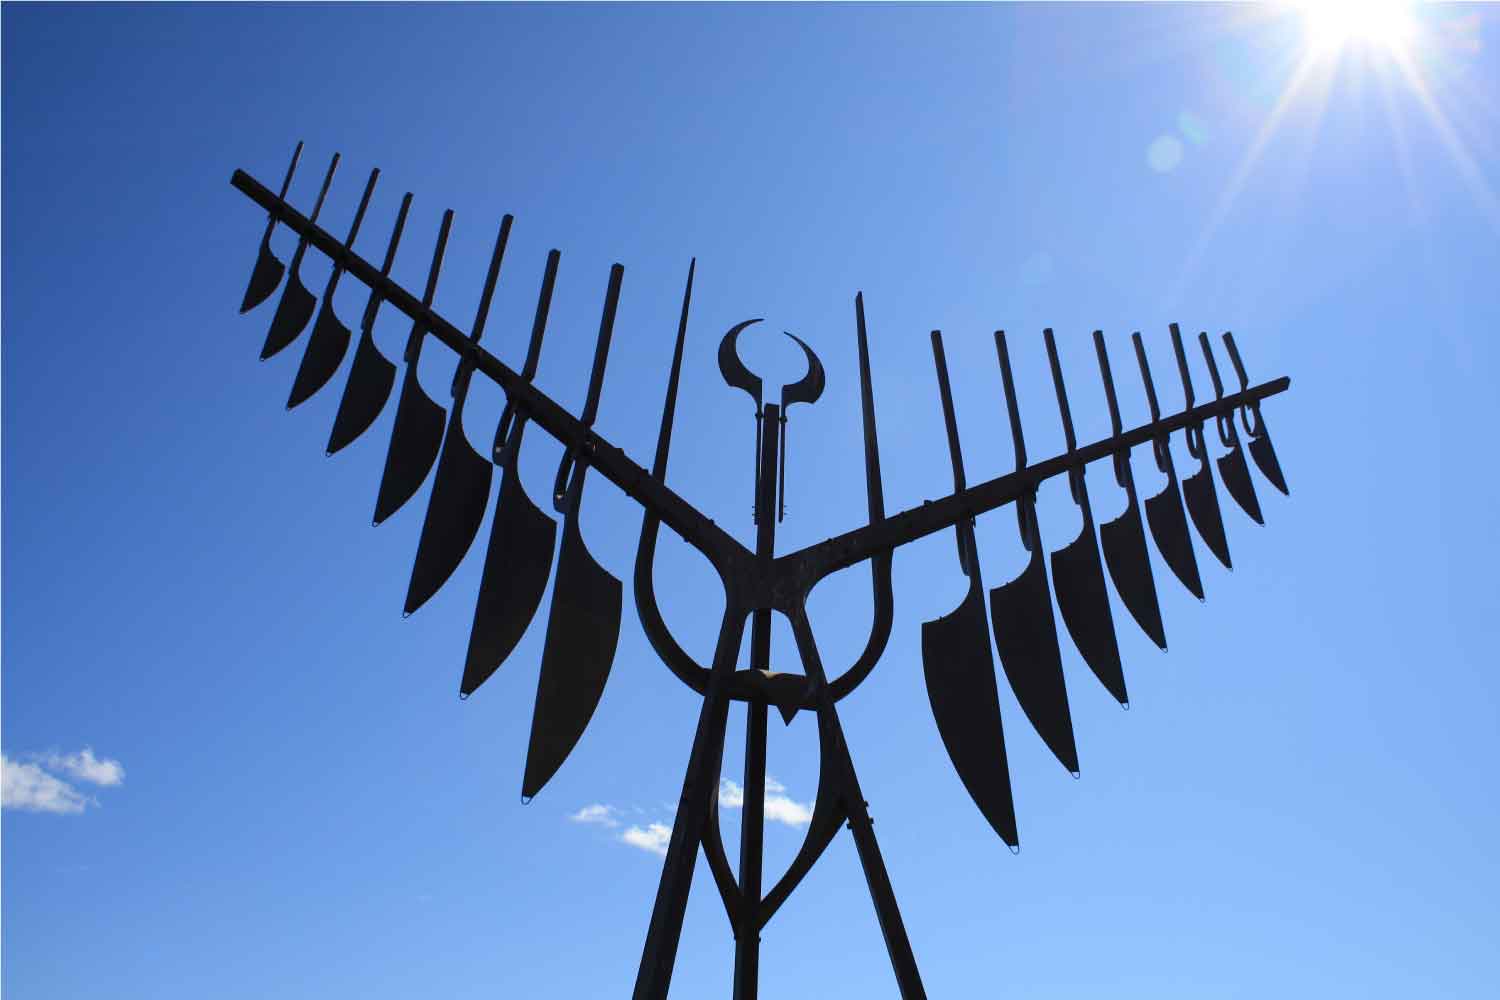 Spirit Catcher Statue located in Barrie, Ontario